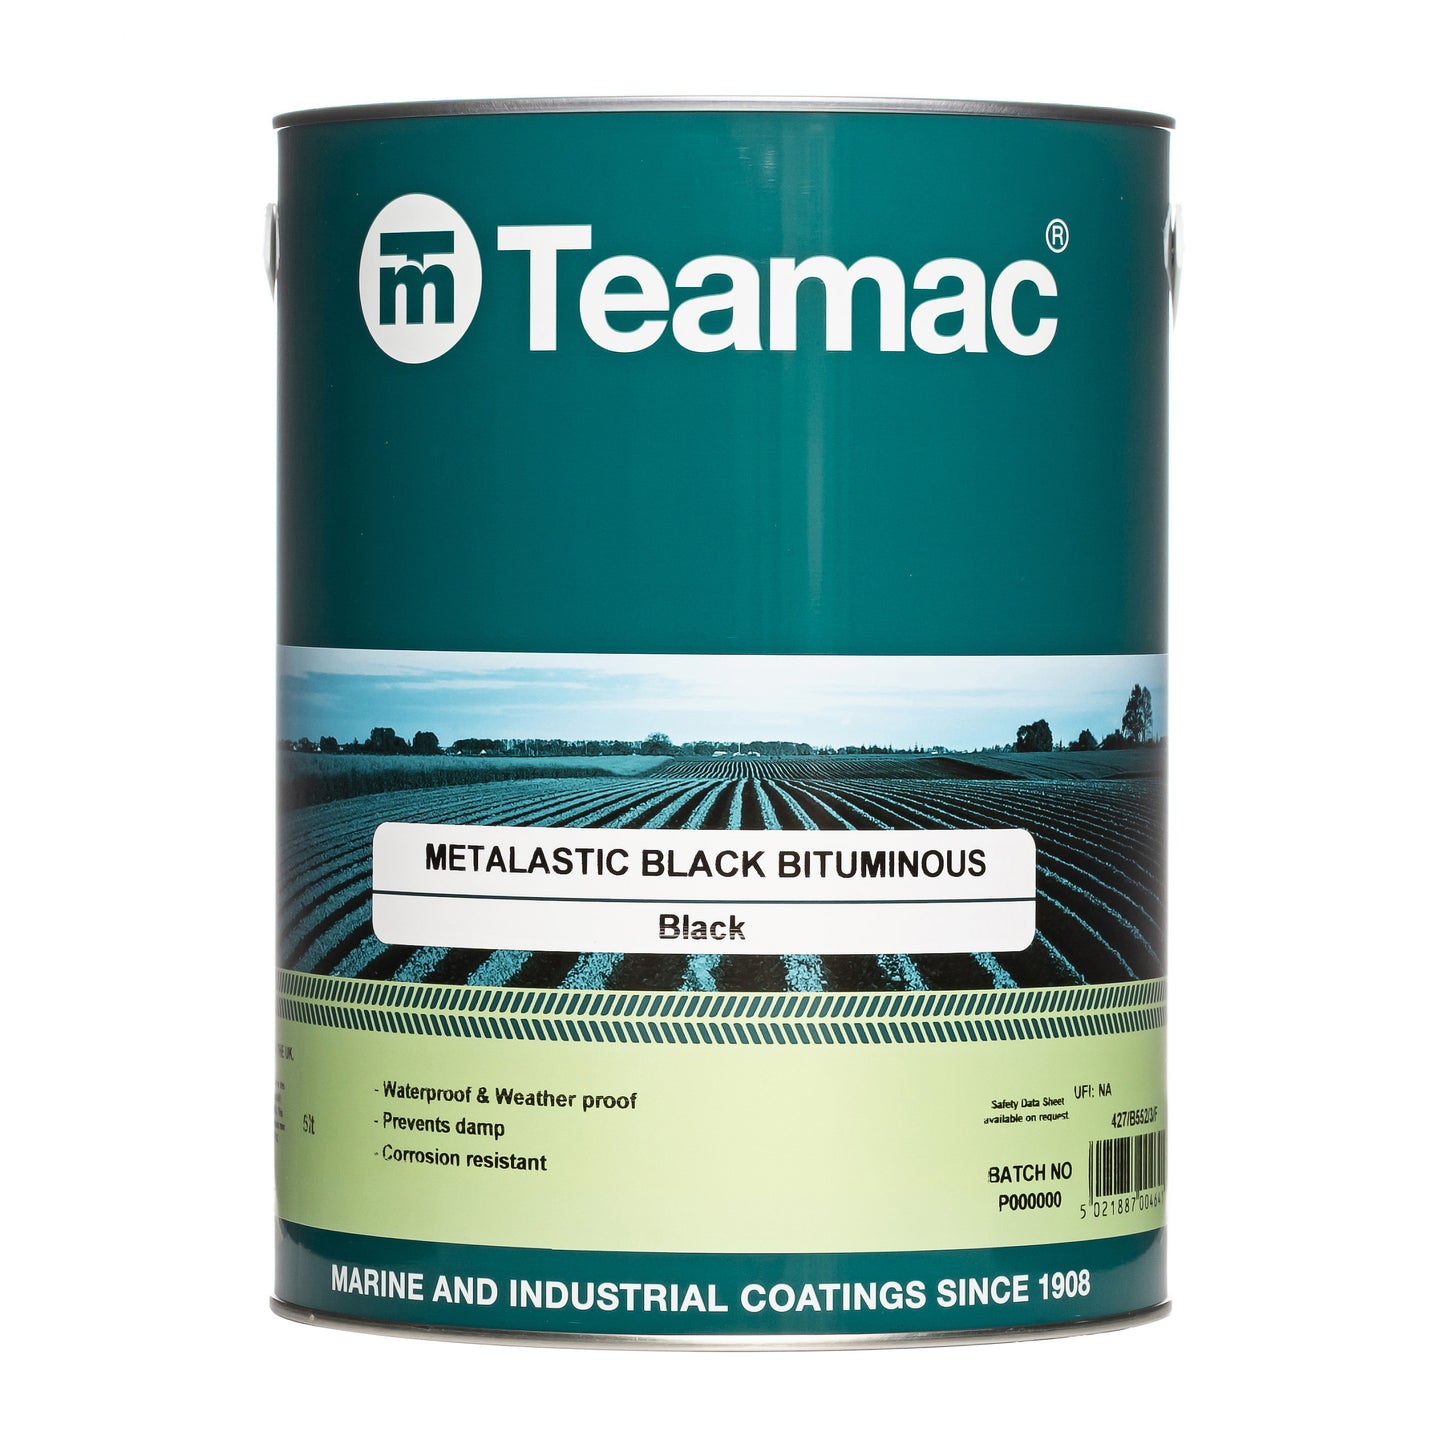 Teamac Metalastic Black Bituminous 25L